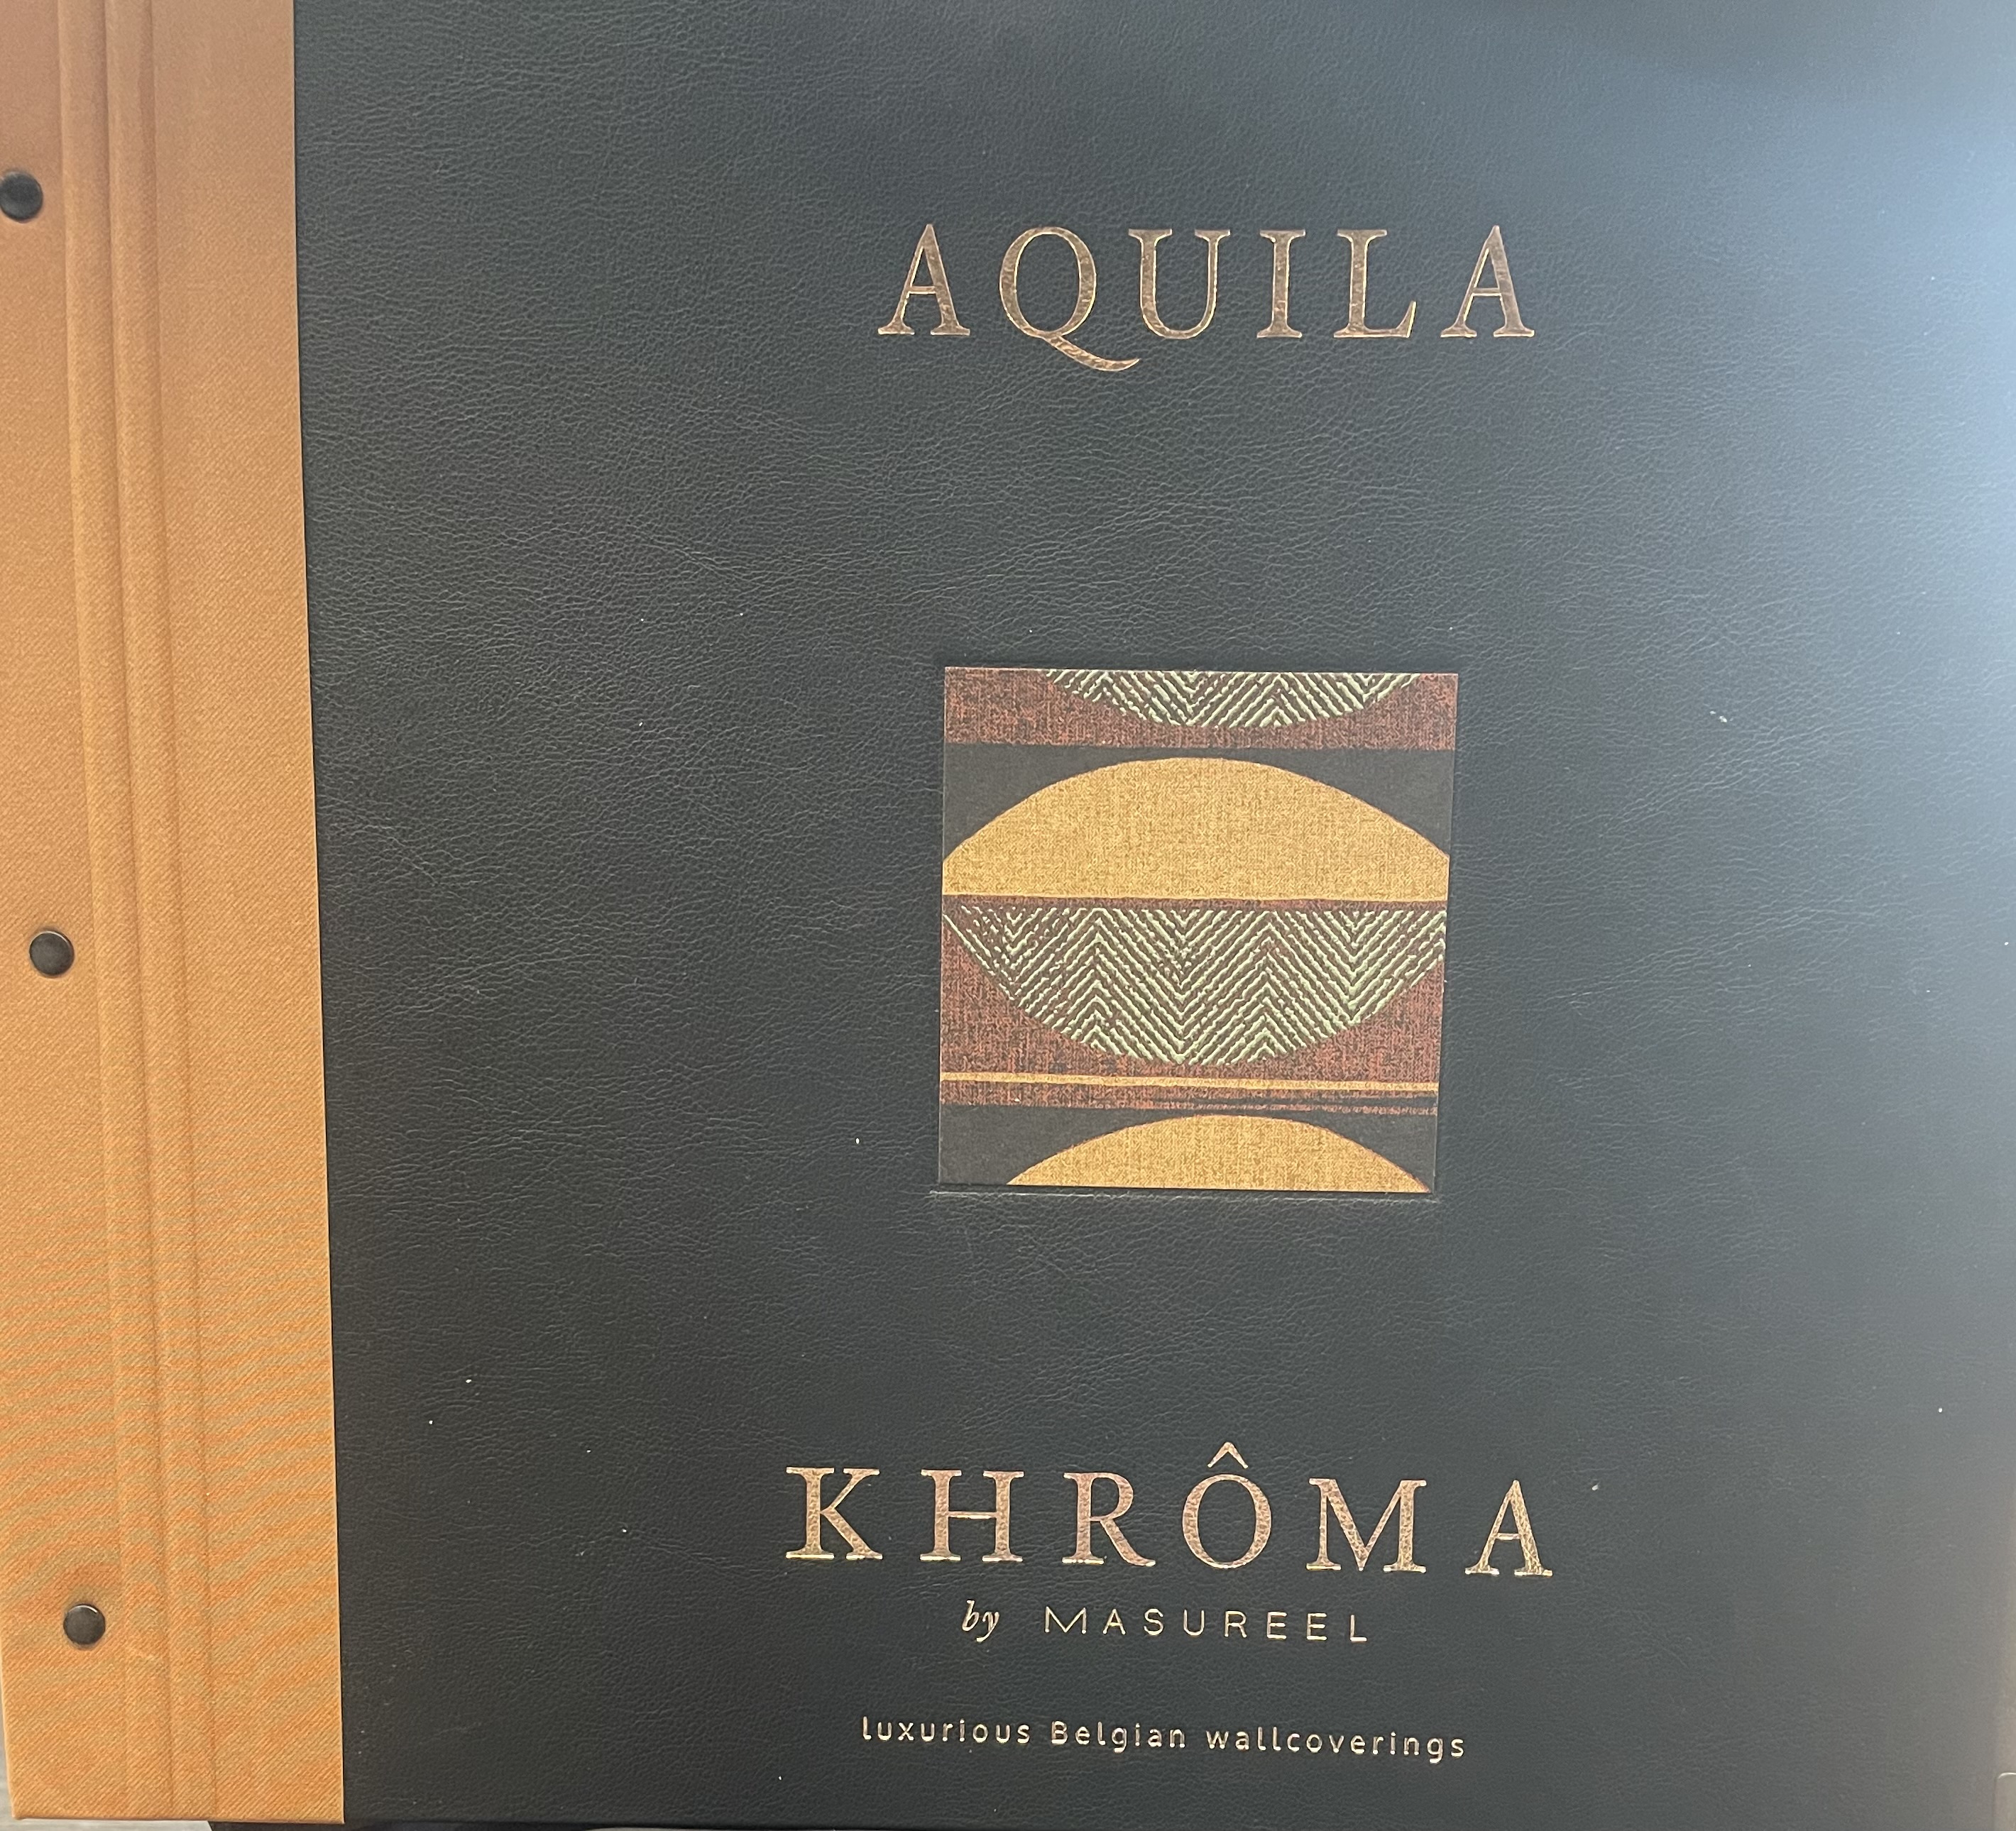 Behang - AQUILA - Khroma by Masureel